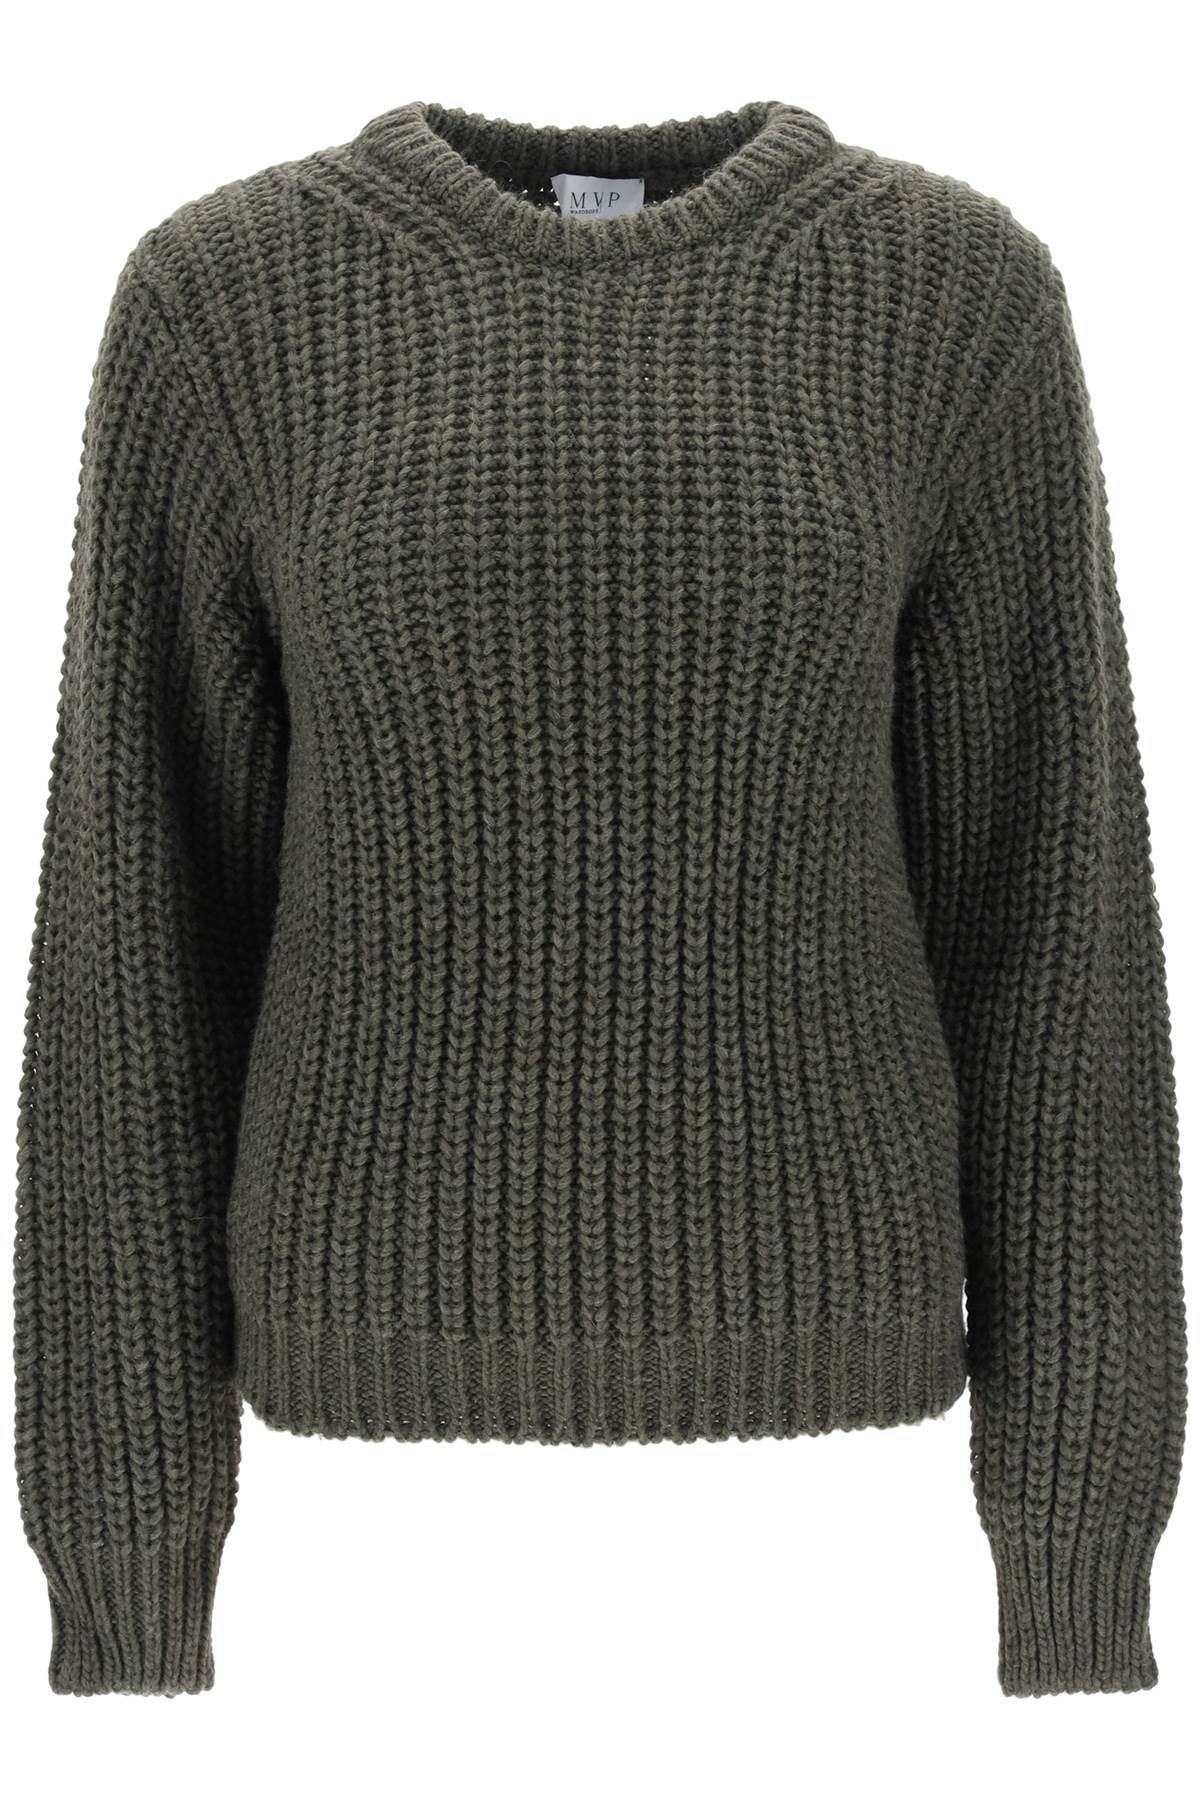 Mvp wardrobe carducci chunky sweater-0